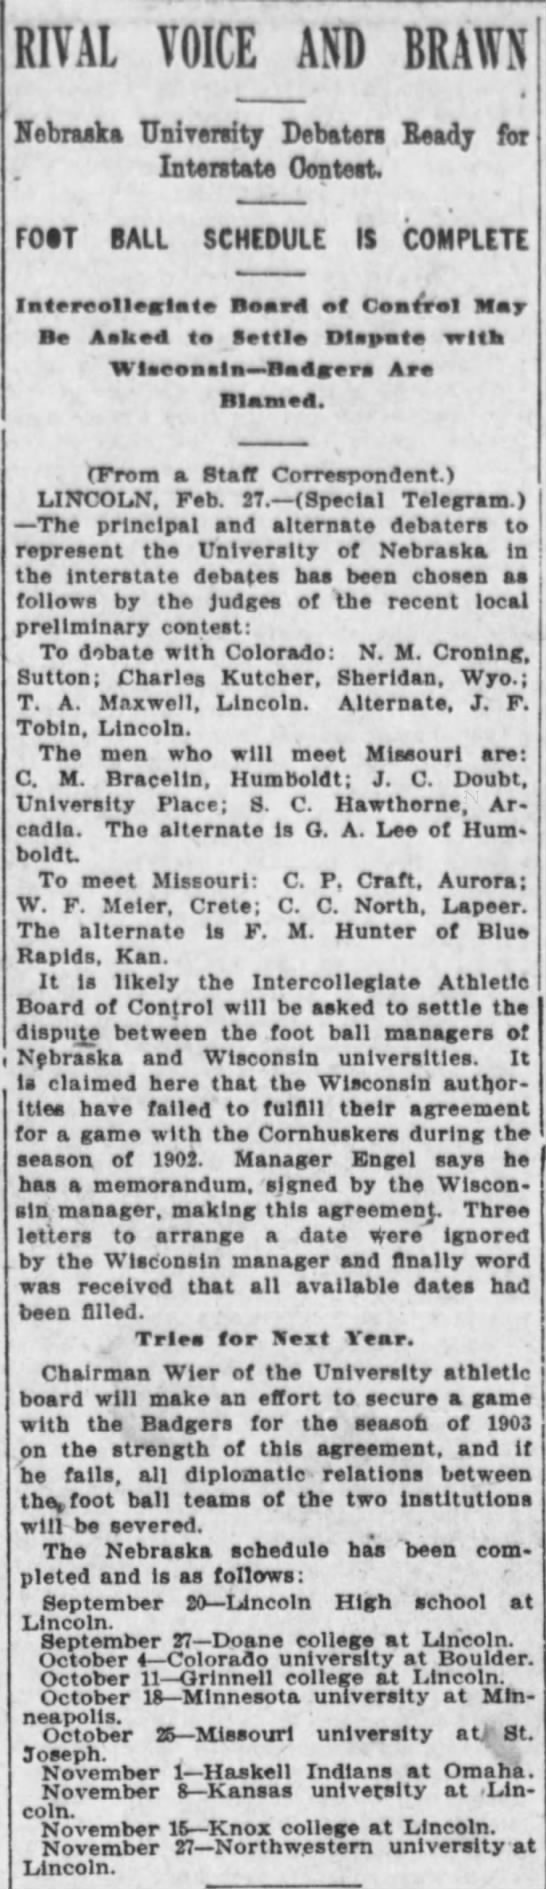 1902 schedule dispute with Wisconsin - 